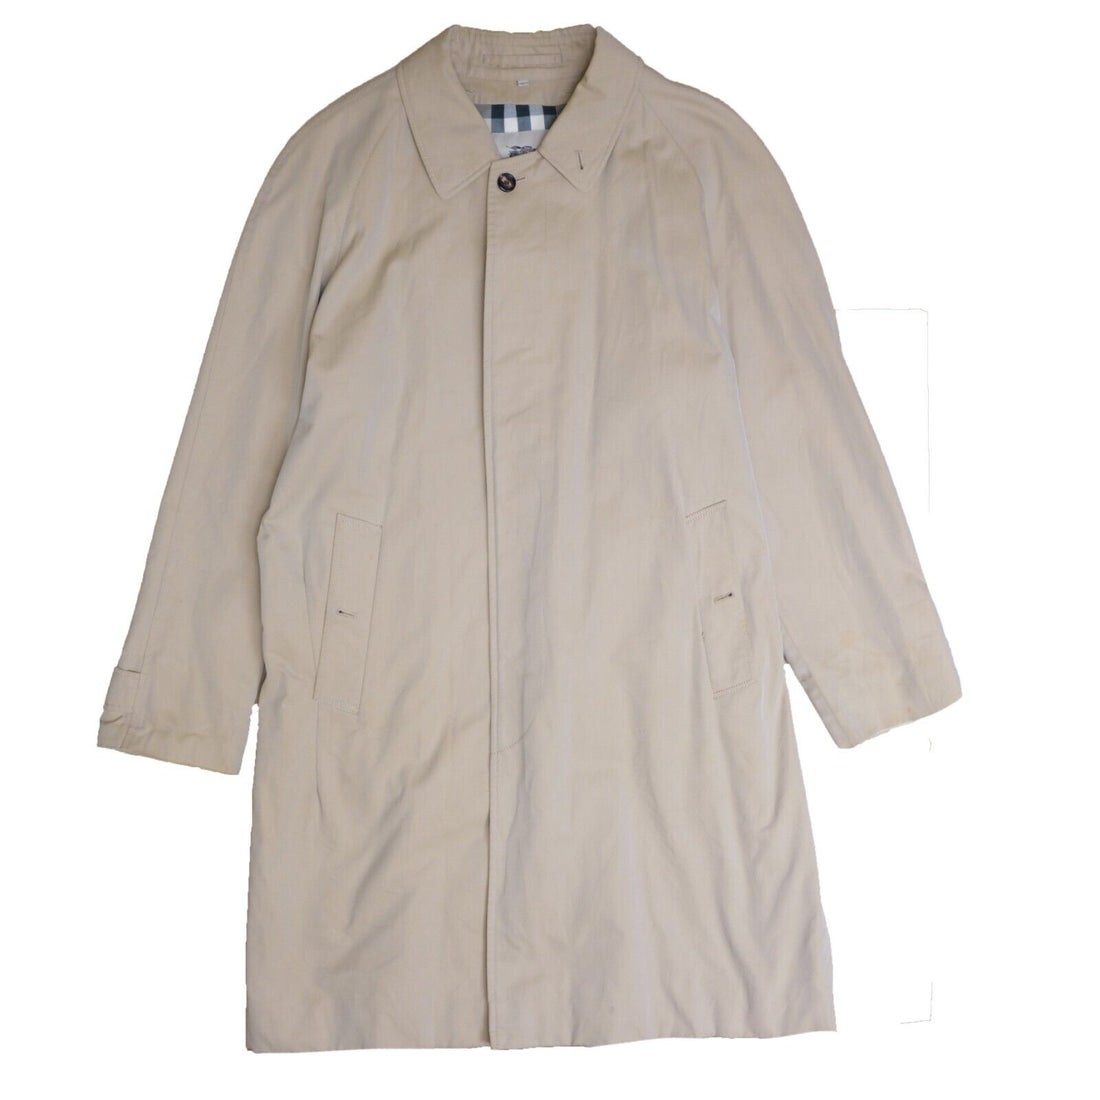 Burberry London Trench Coat Jacket Size Large Beige Nova Check Plaid